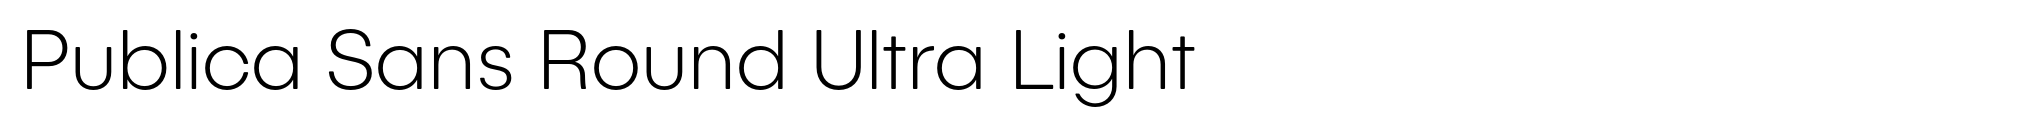 Publica Sans Round Ultra Light image